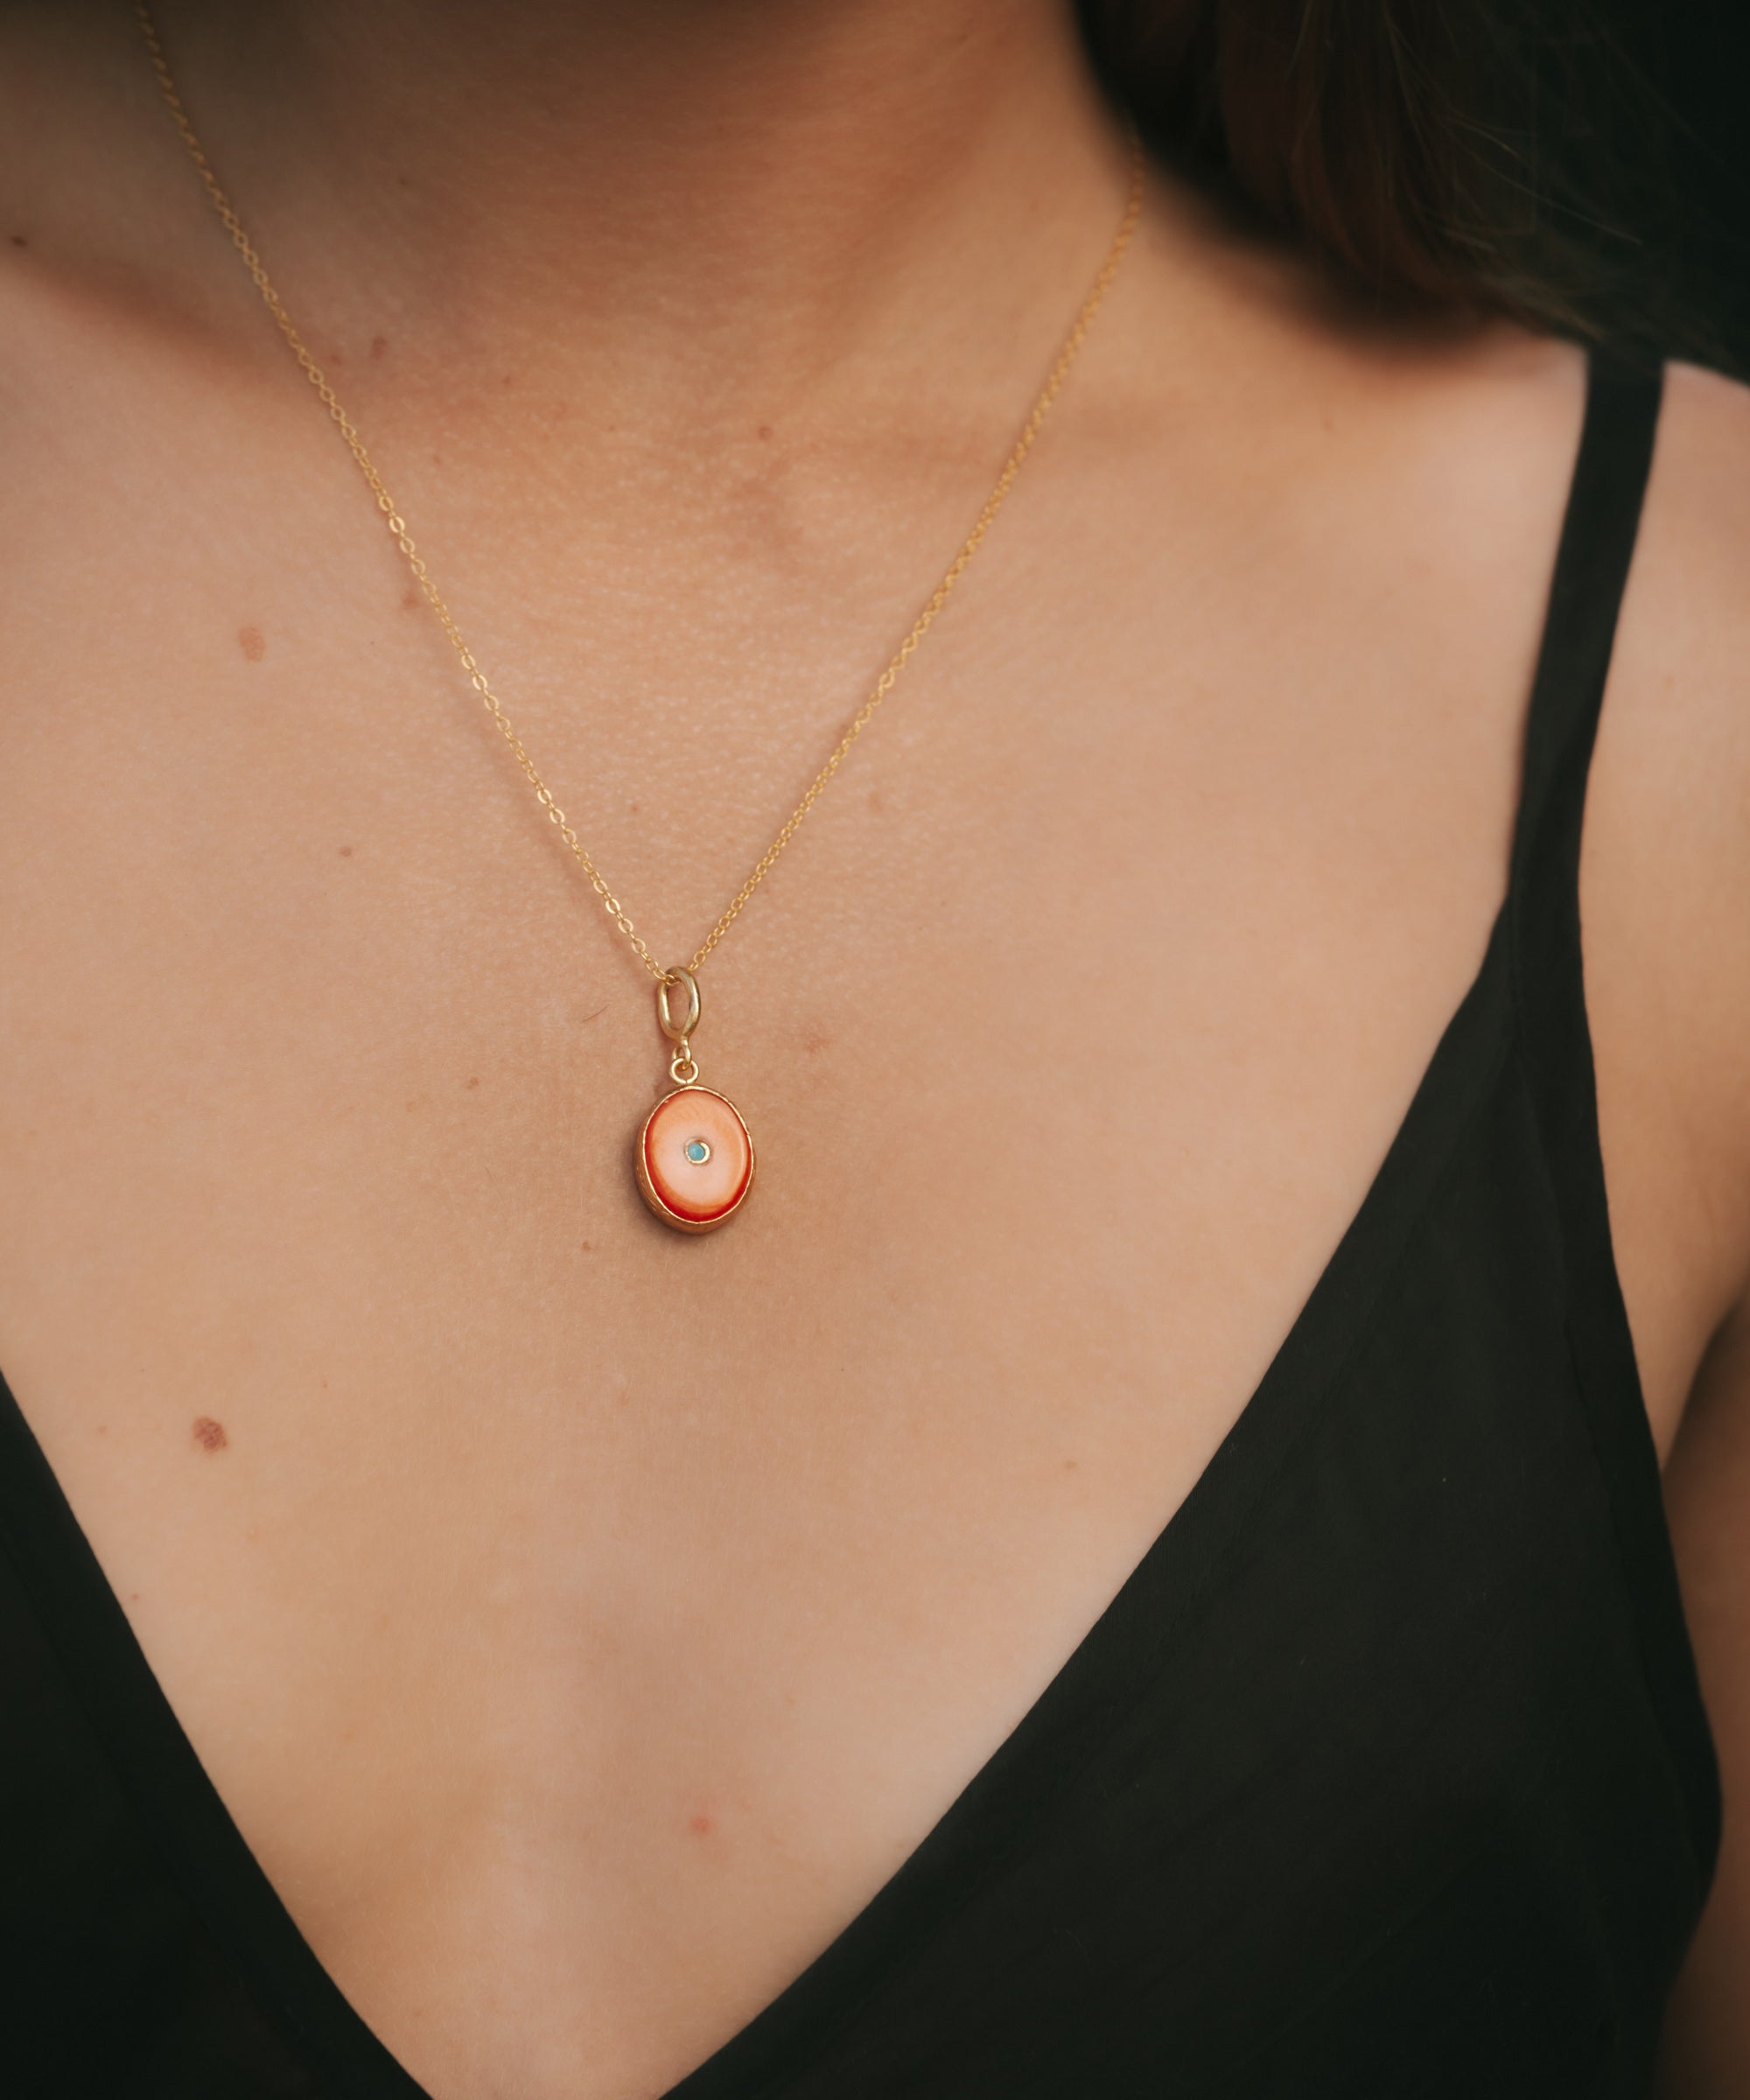 Amalfi Orange Pendant Necklace | Sustainable Jewellery by Ottoman Hands